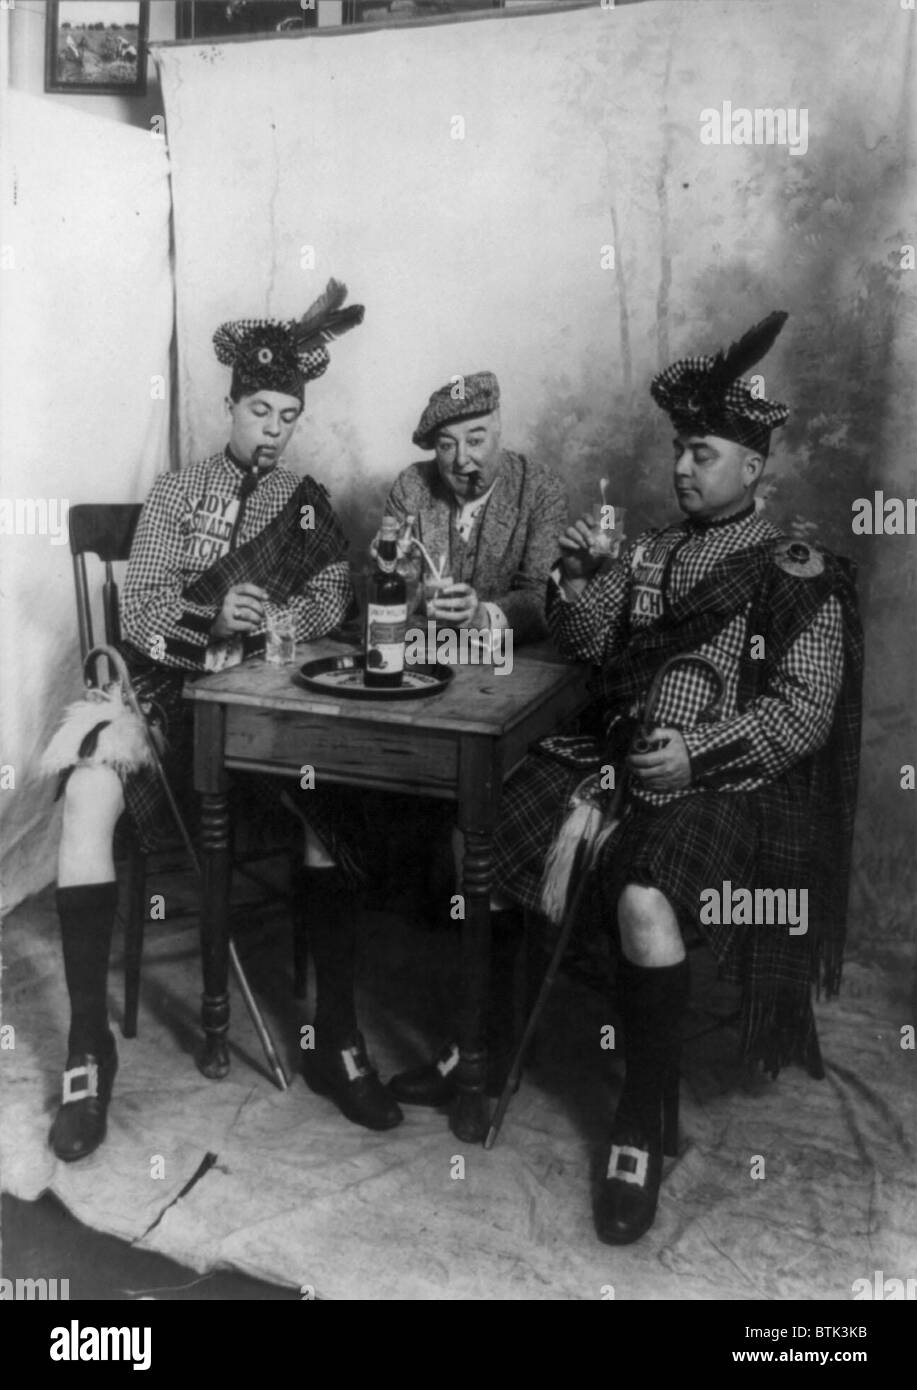 Two men wearing kilts and man smoking cigar, seated at small table drinking Sandy MacDonald scotch, photograph, 1913 Stock Photo